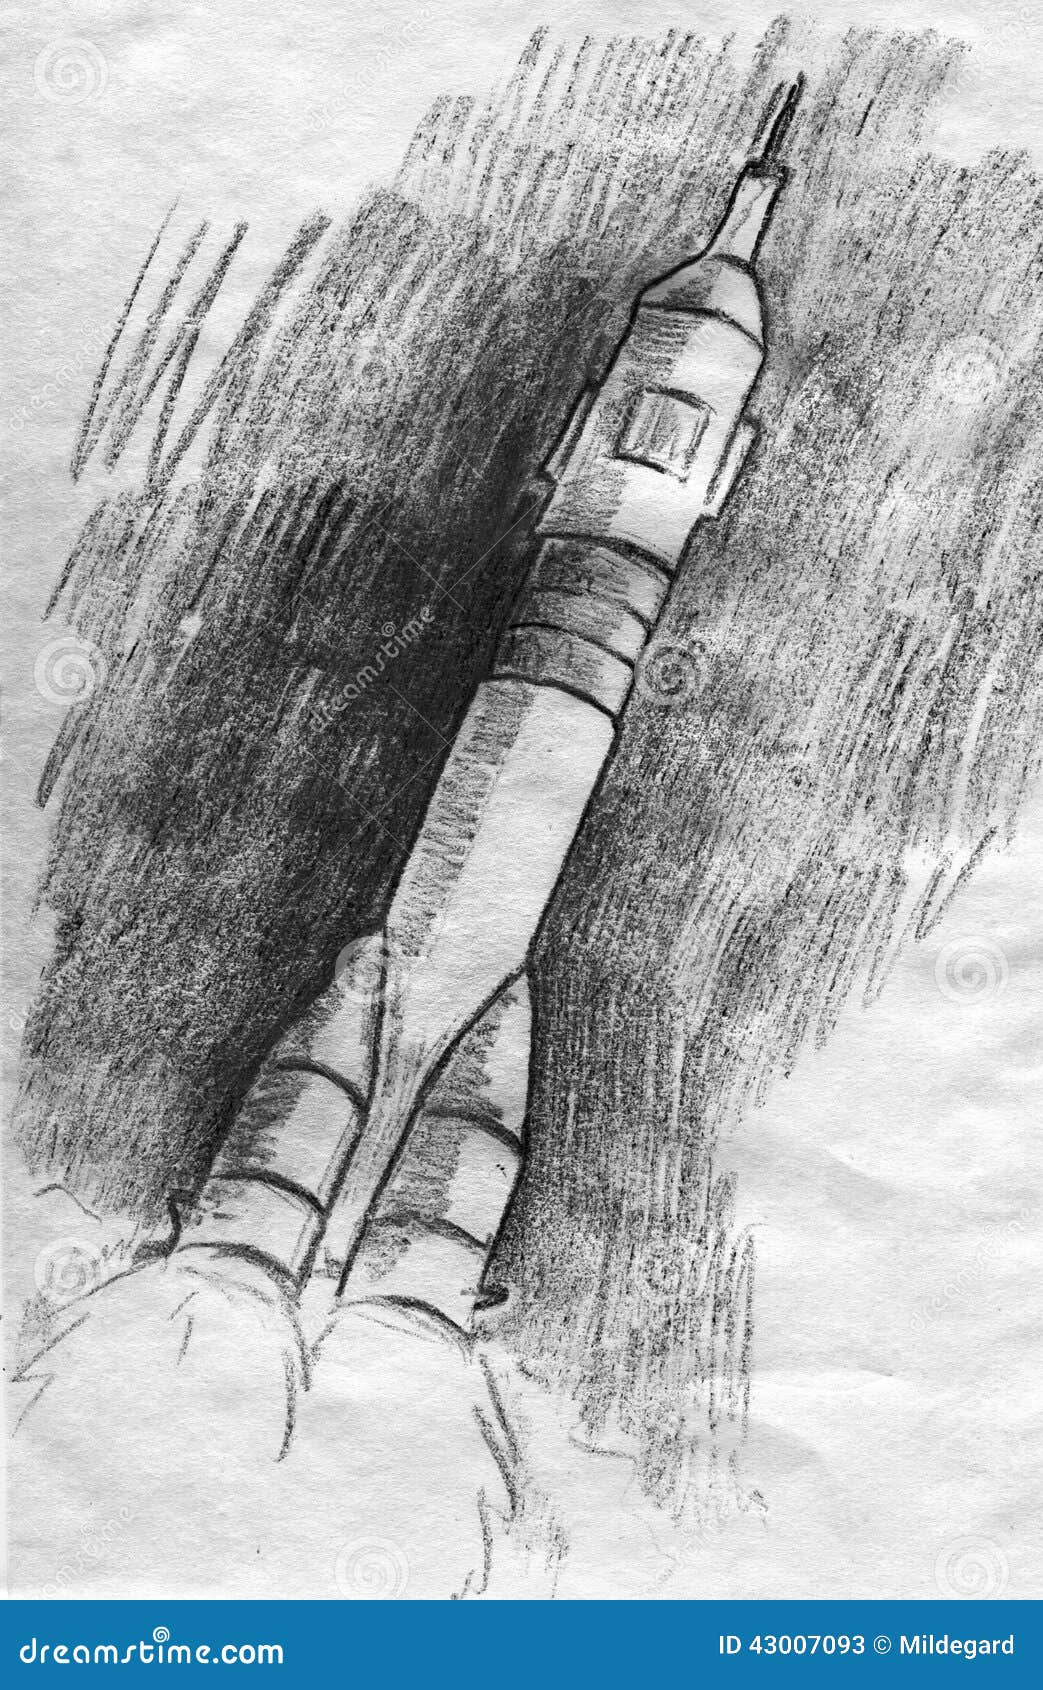 Rocket in the night sky stock illustration. Illustration of power